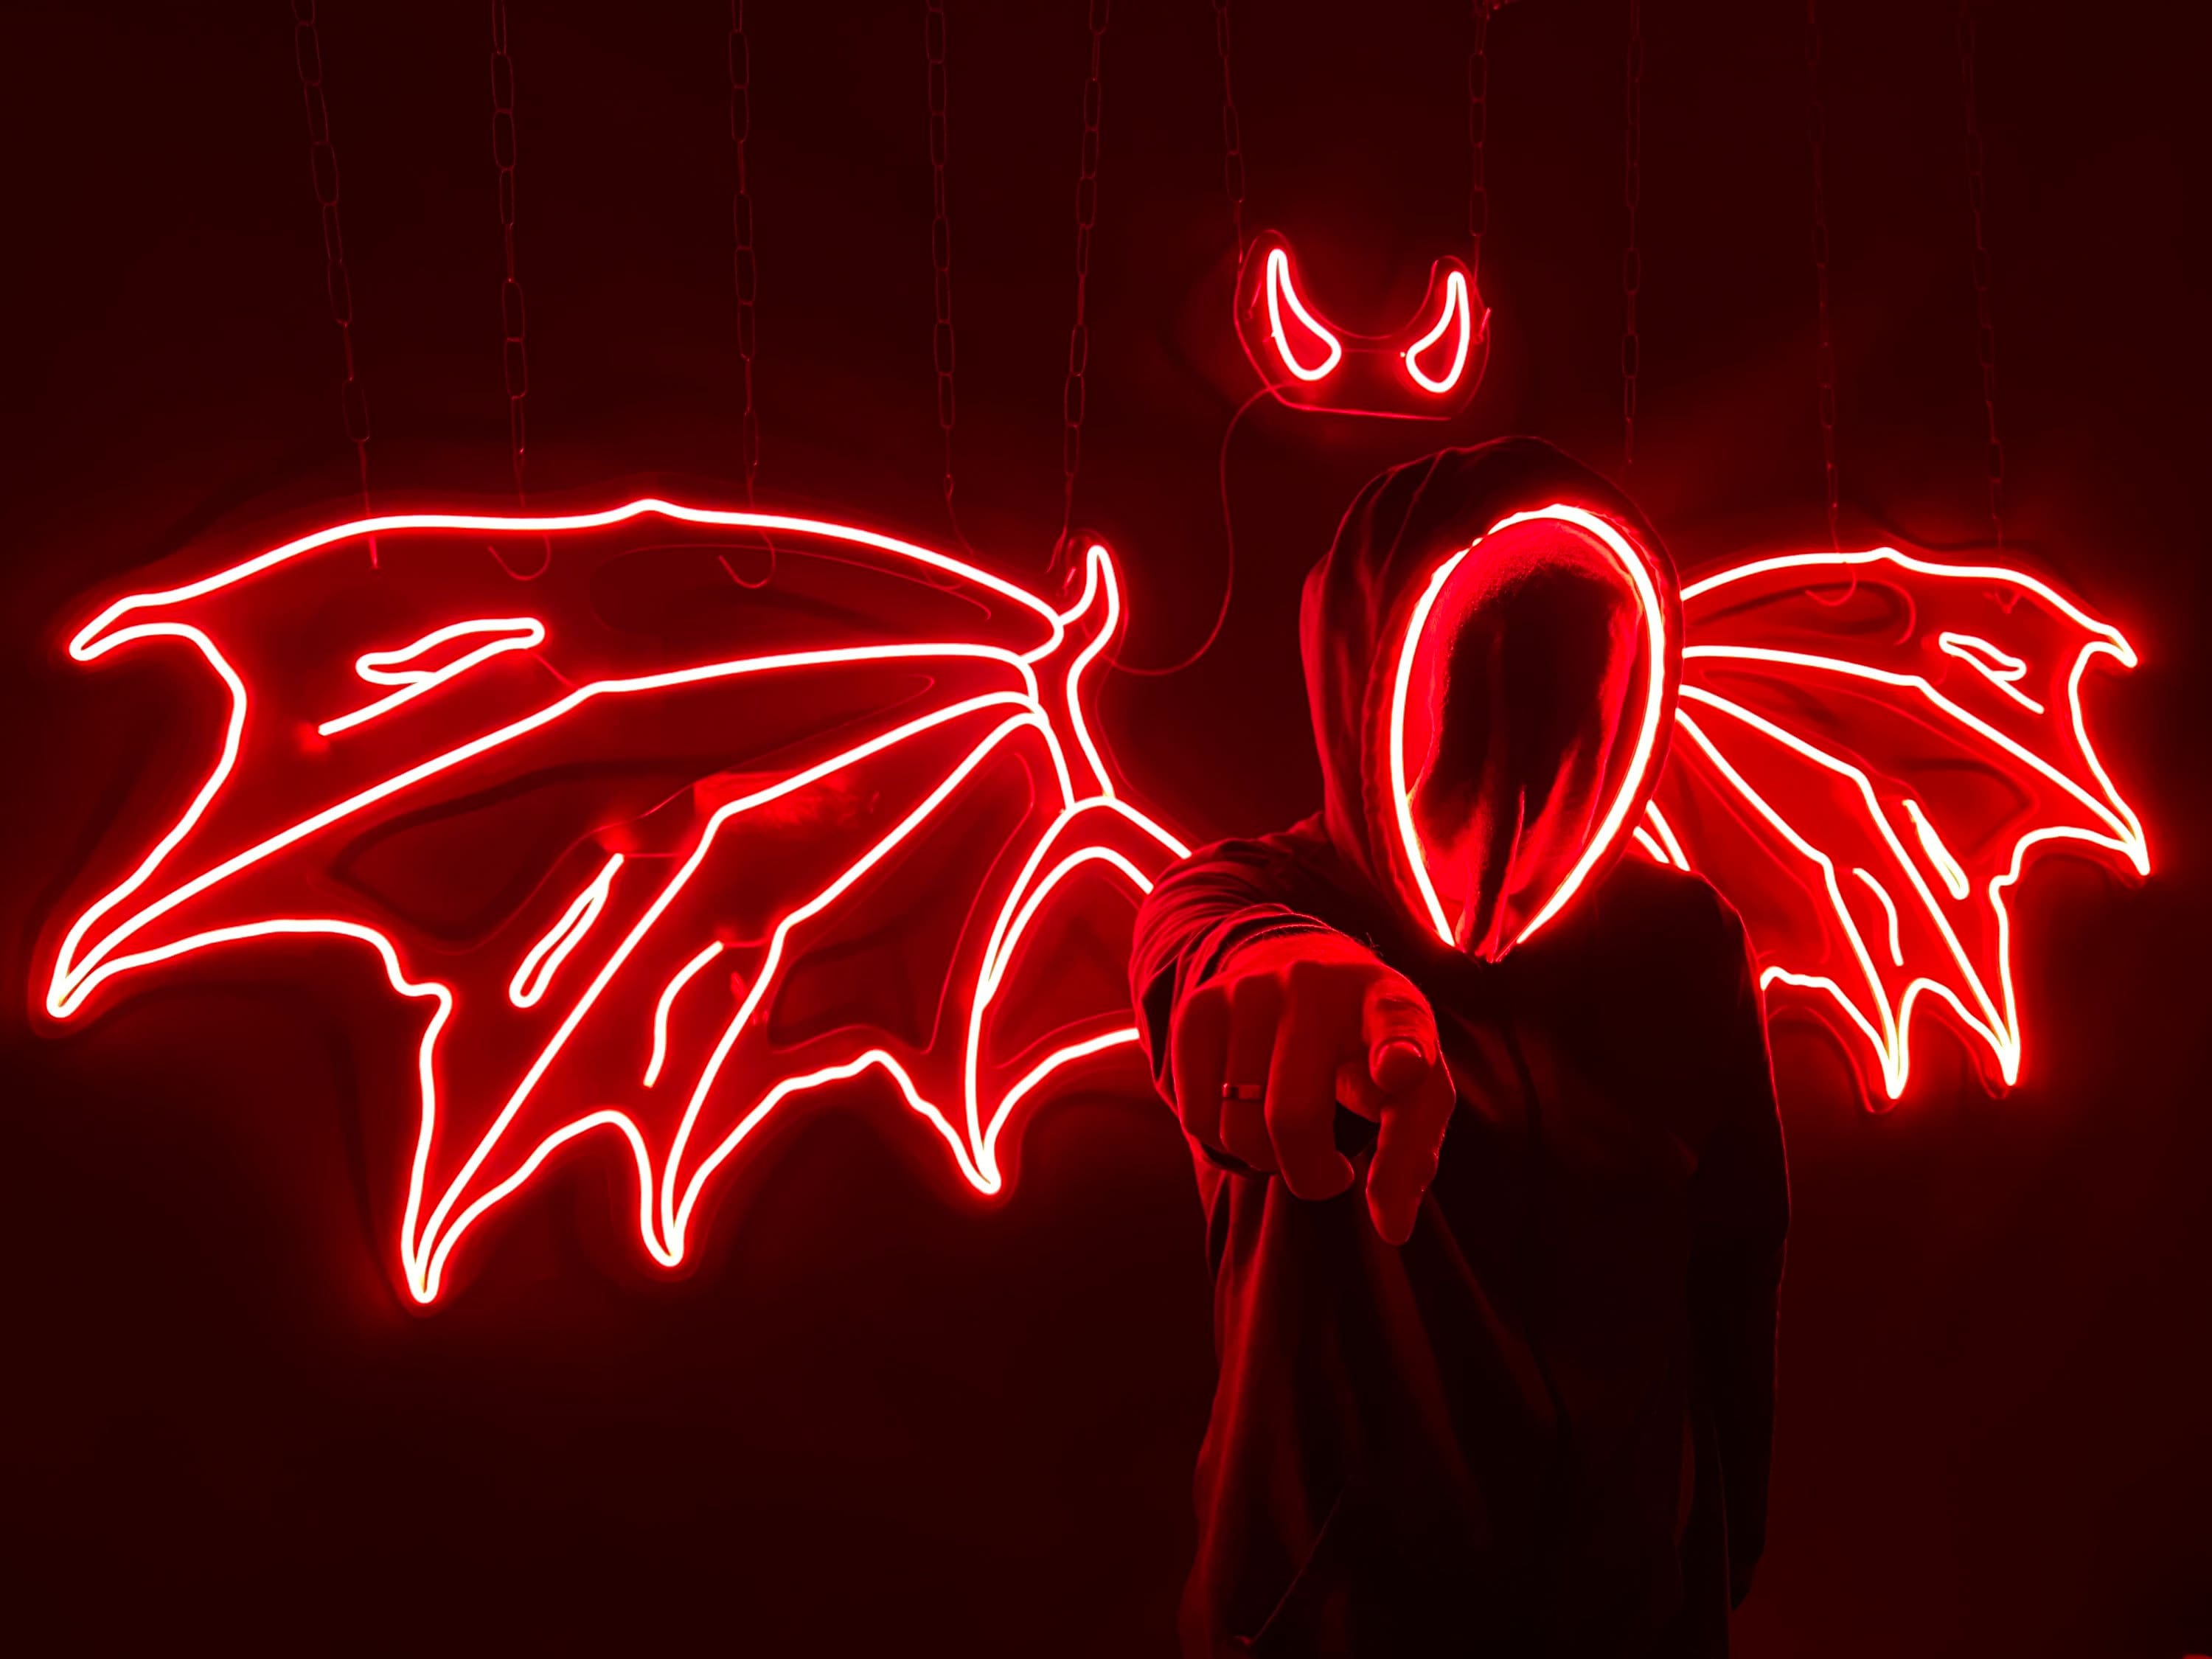 Demons and Devil Club Wings